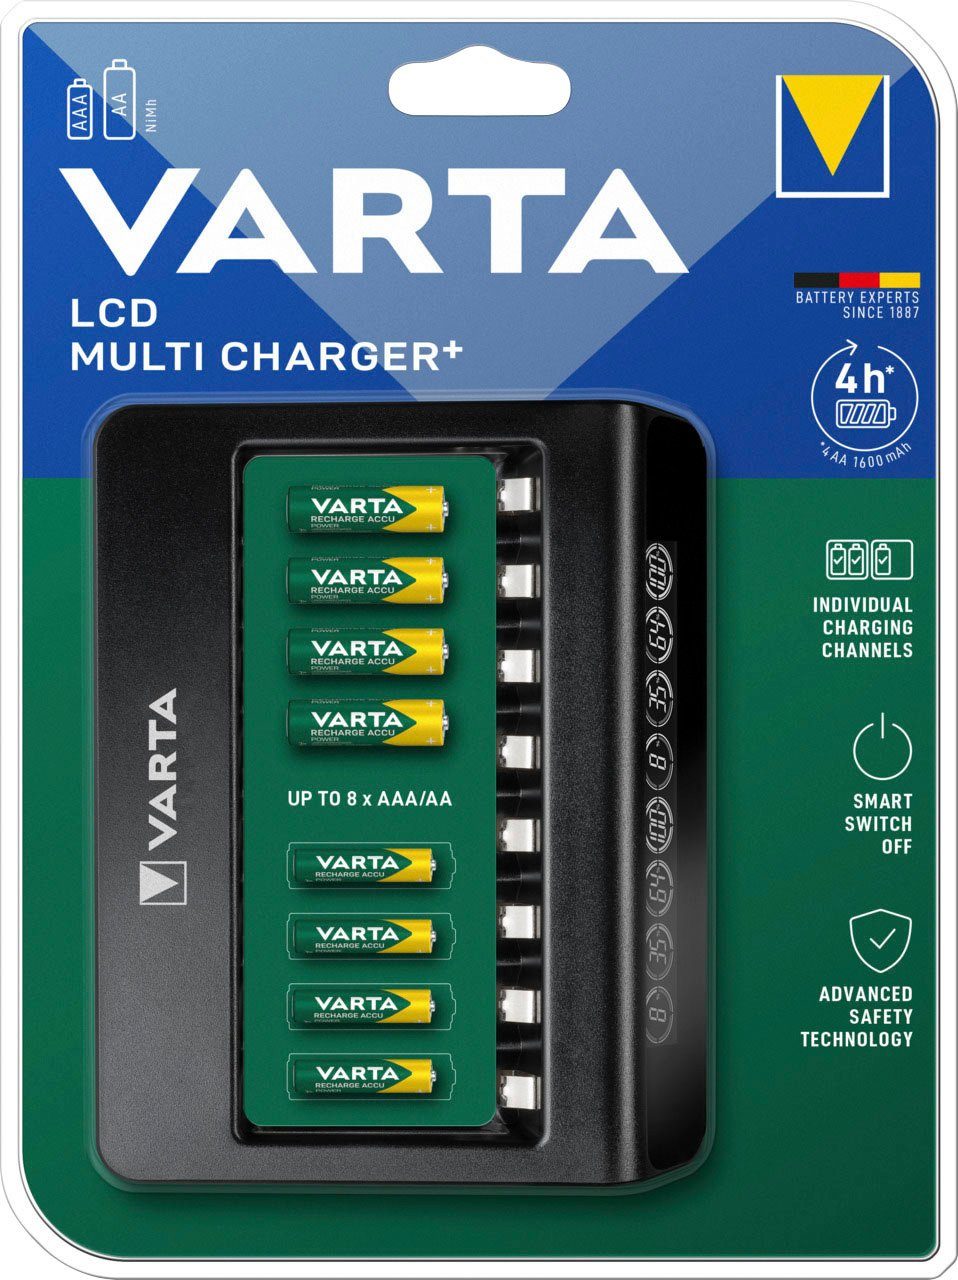 VARTA VARTA LCD Multi Charger+ für 8 AA/AAA Akkus mit Einzelschachtladun  Akku-Ladestation, Lieferumfang: VARTA LCD Multi Charger+ mit Netzteil | Akkus und PowerBanks